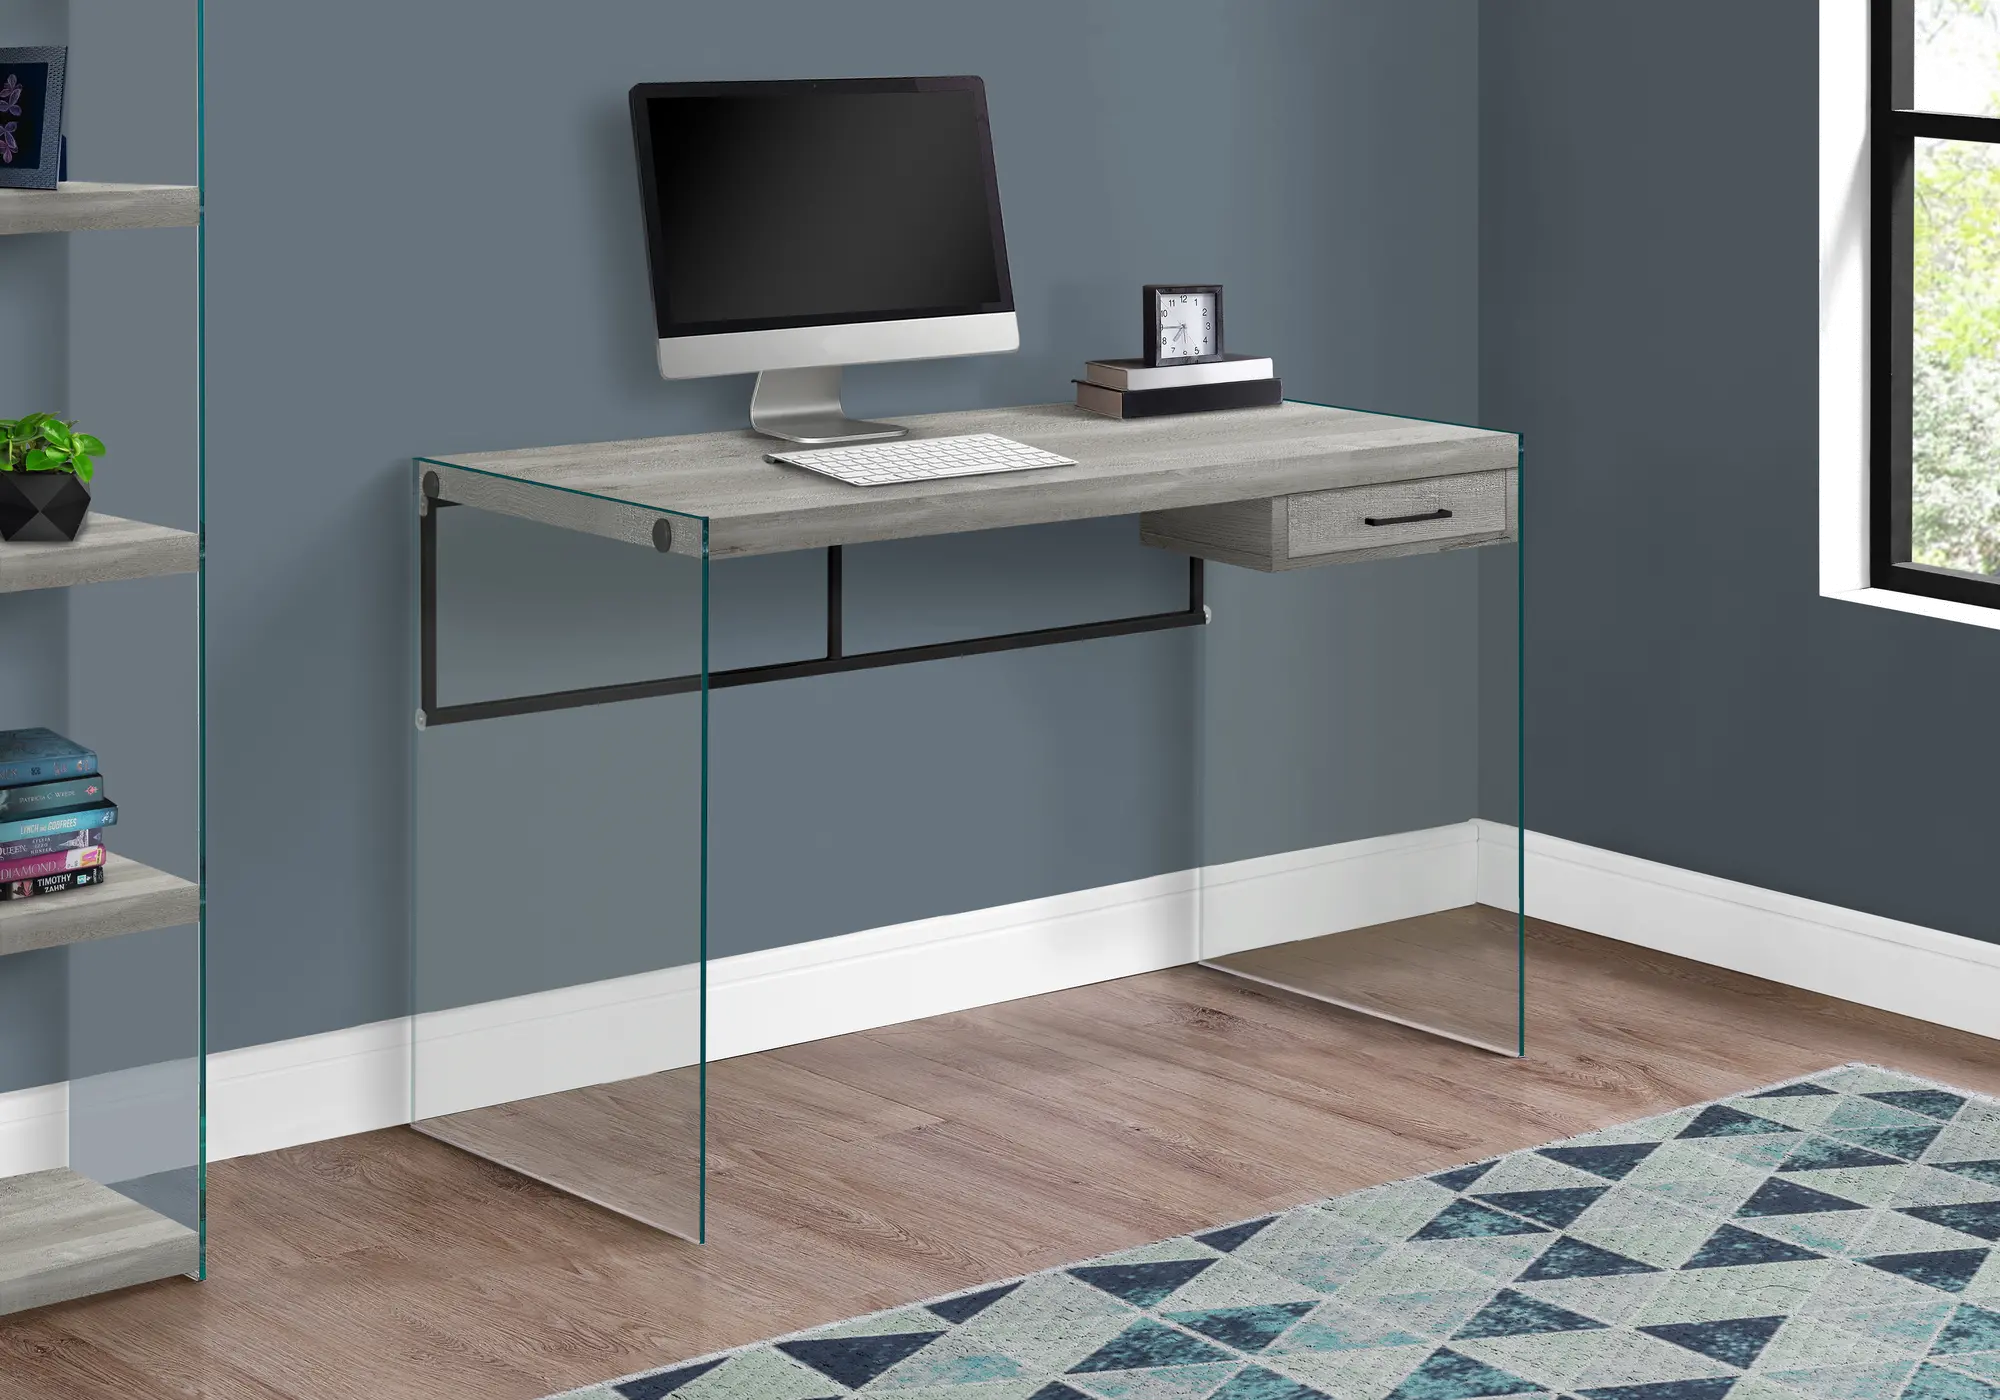 Photos - Office Desk Monarch Specialties Contemporary Gray and Glass Computer Desk I 7445 